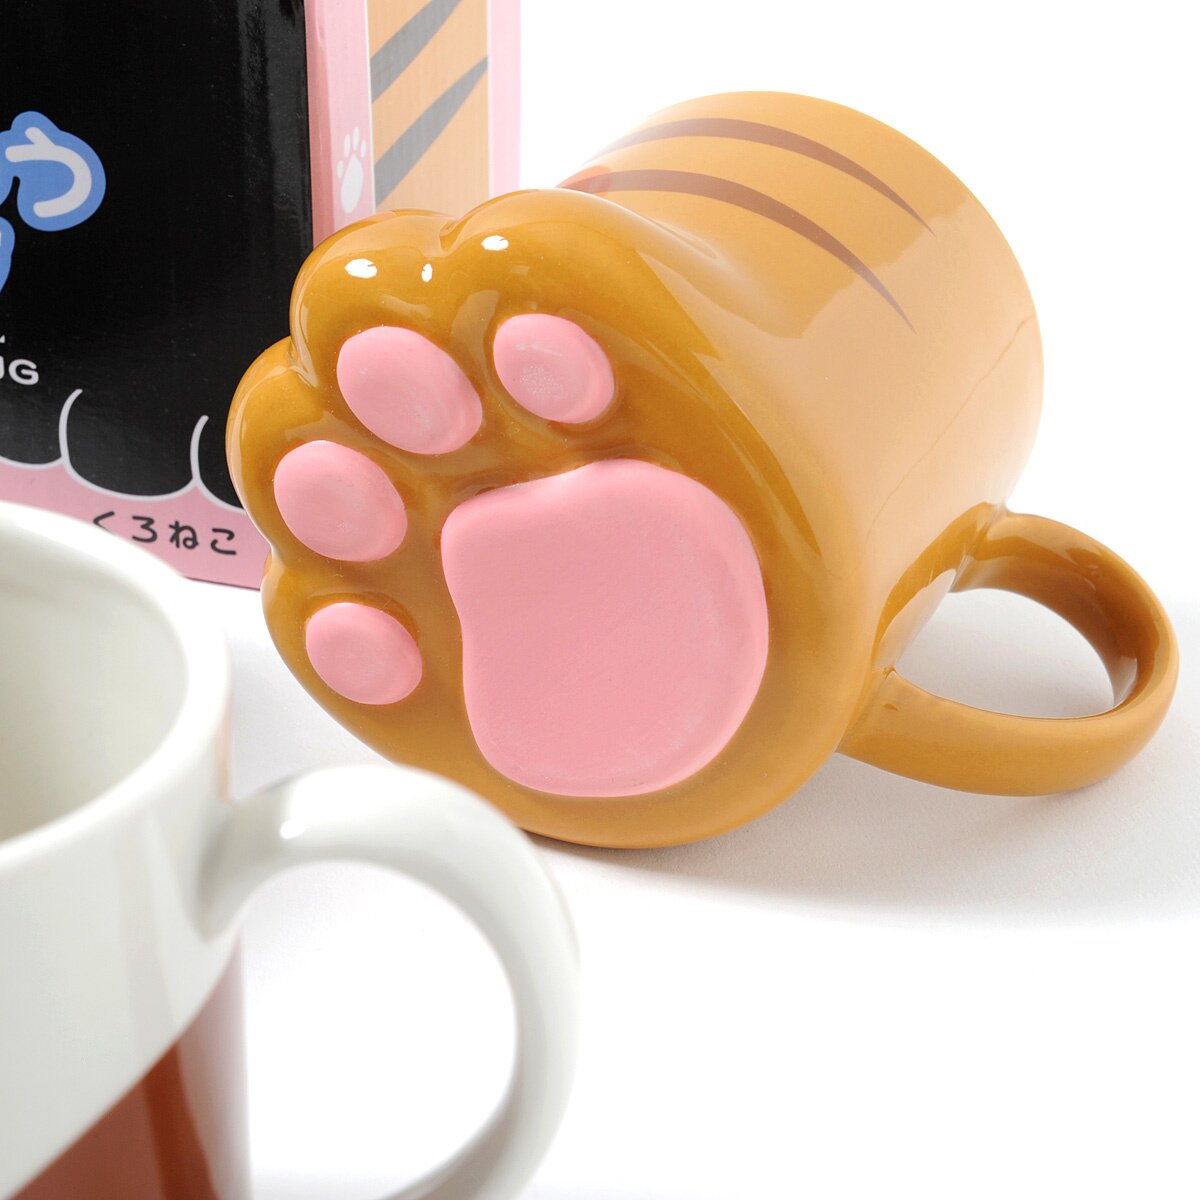 Kawaii Cat Paw Ceramic Coffee Cup - Limited Edition